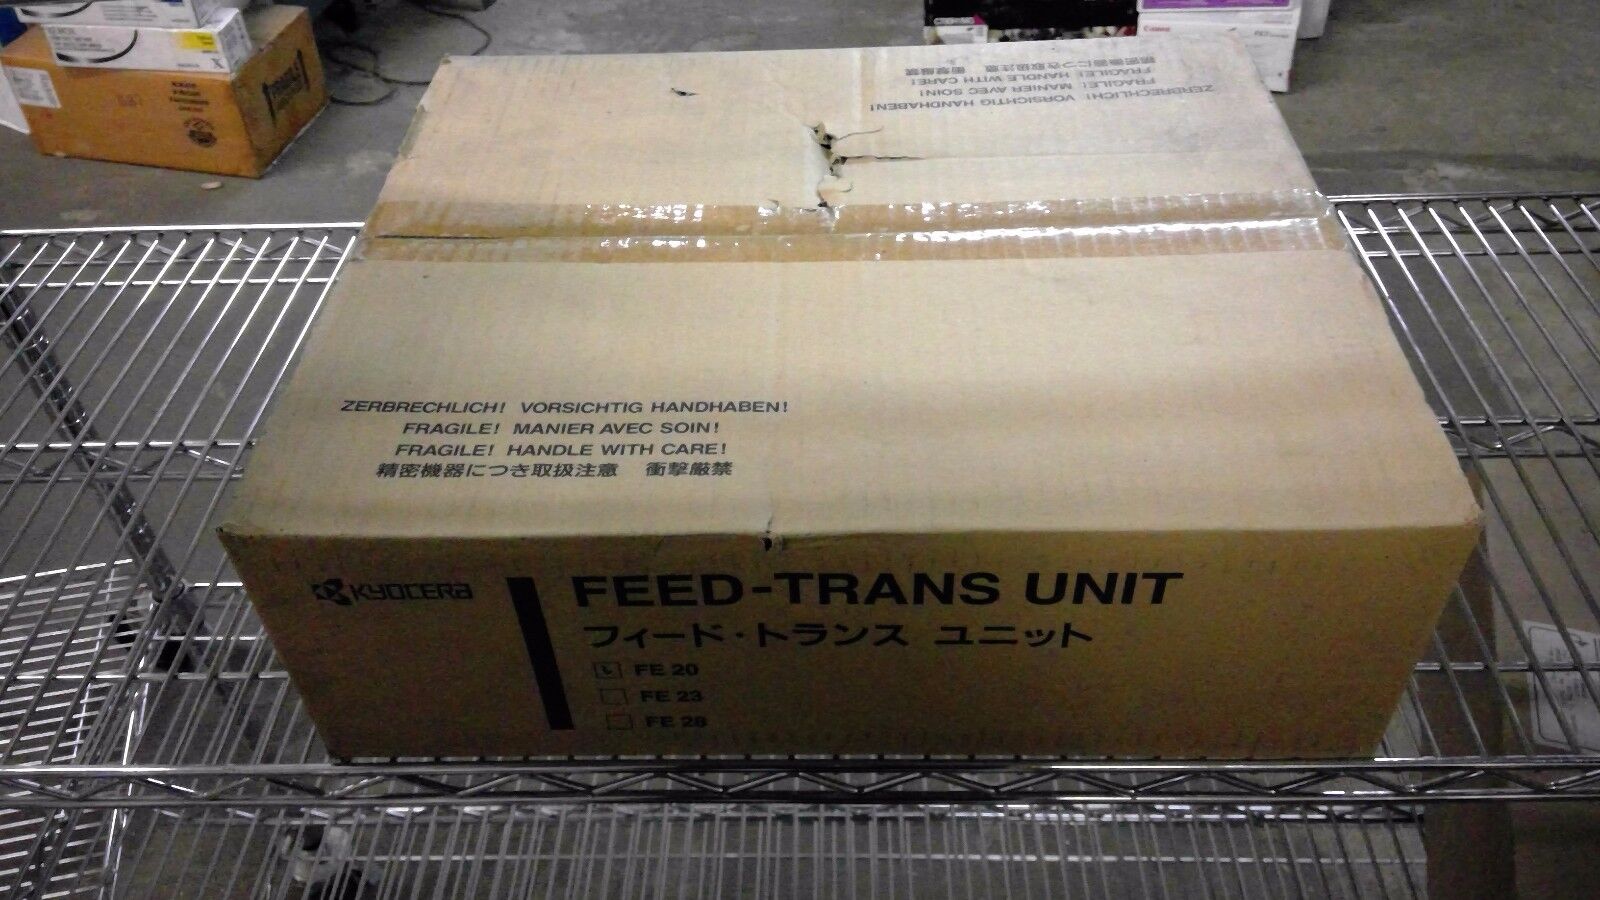 GENUINE NEW KYOCERA FEED TRANS UNIT FE 20 SEALED BOX